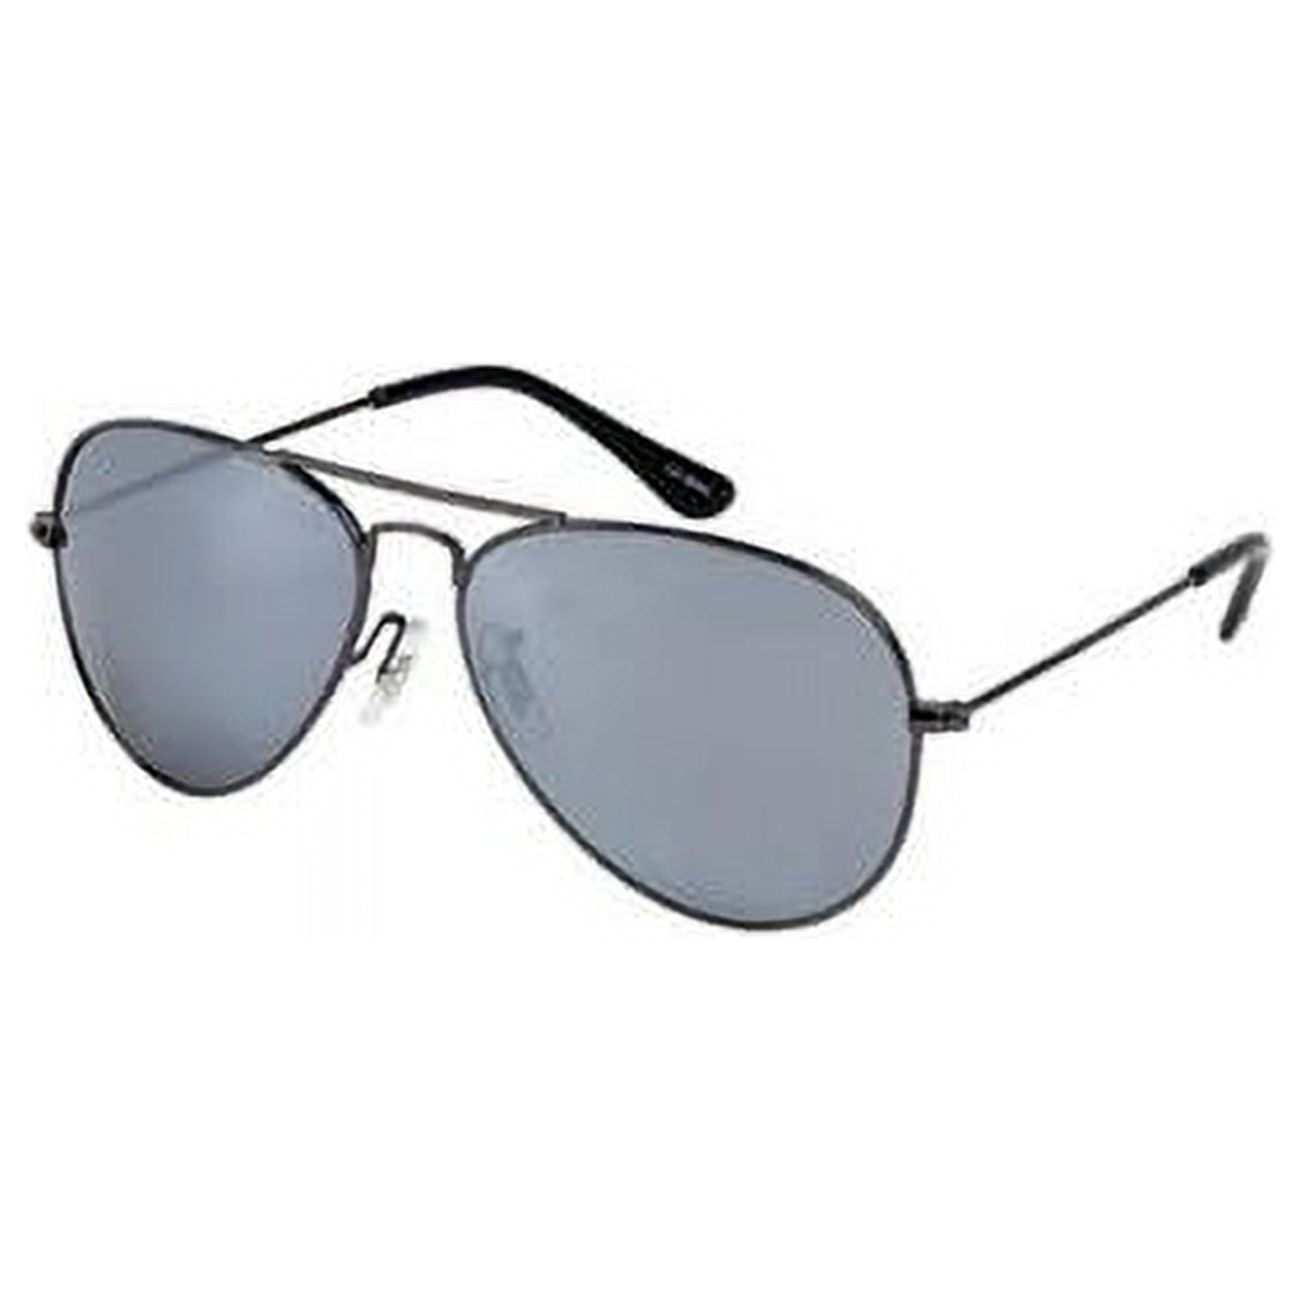 Teardrop Metal Aviator Sunglasses, Chrome Frame, 2.0mm Mirror Lens - image 1 of 1